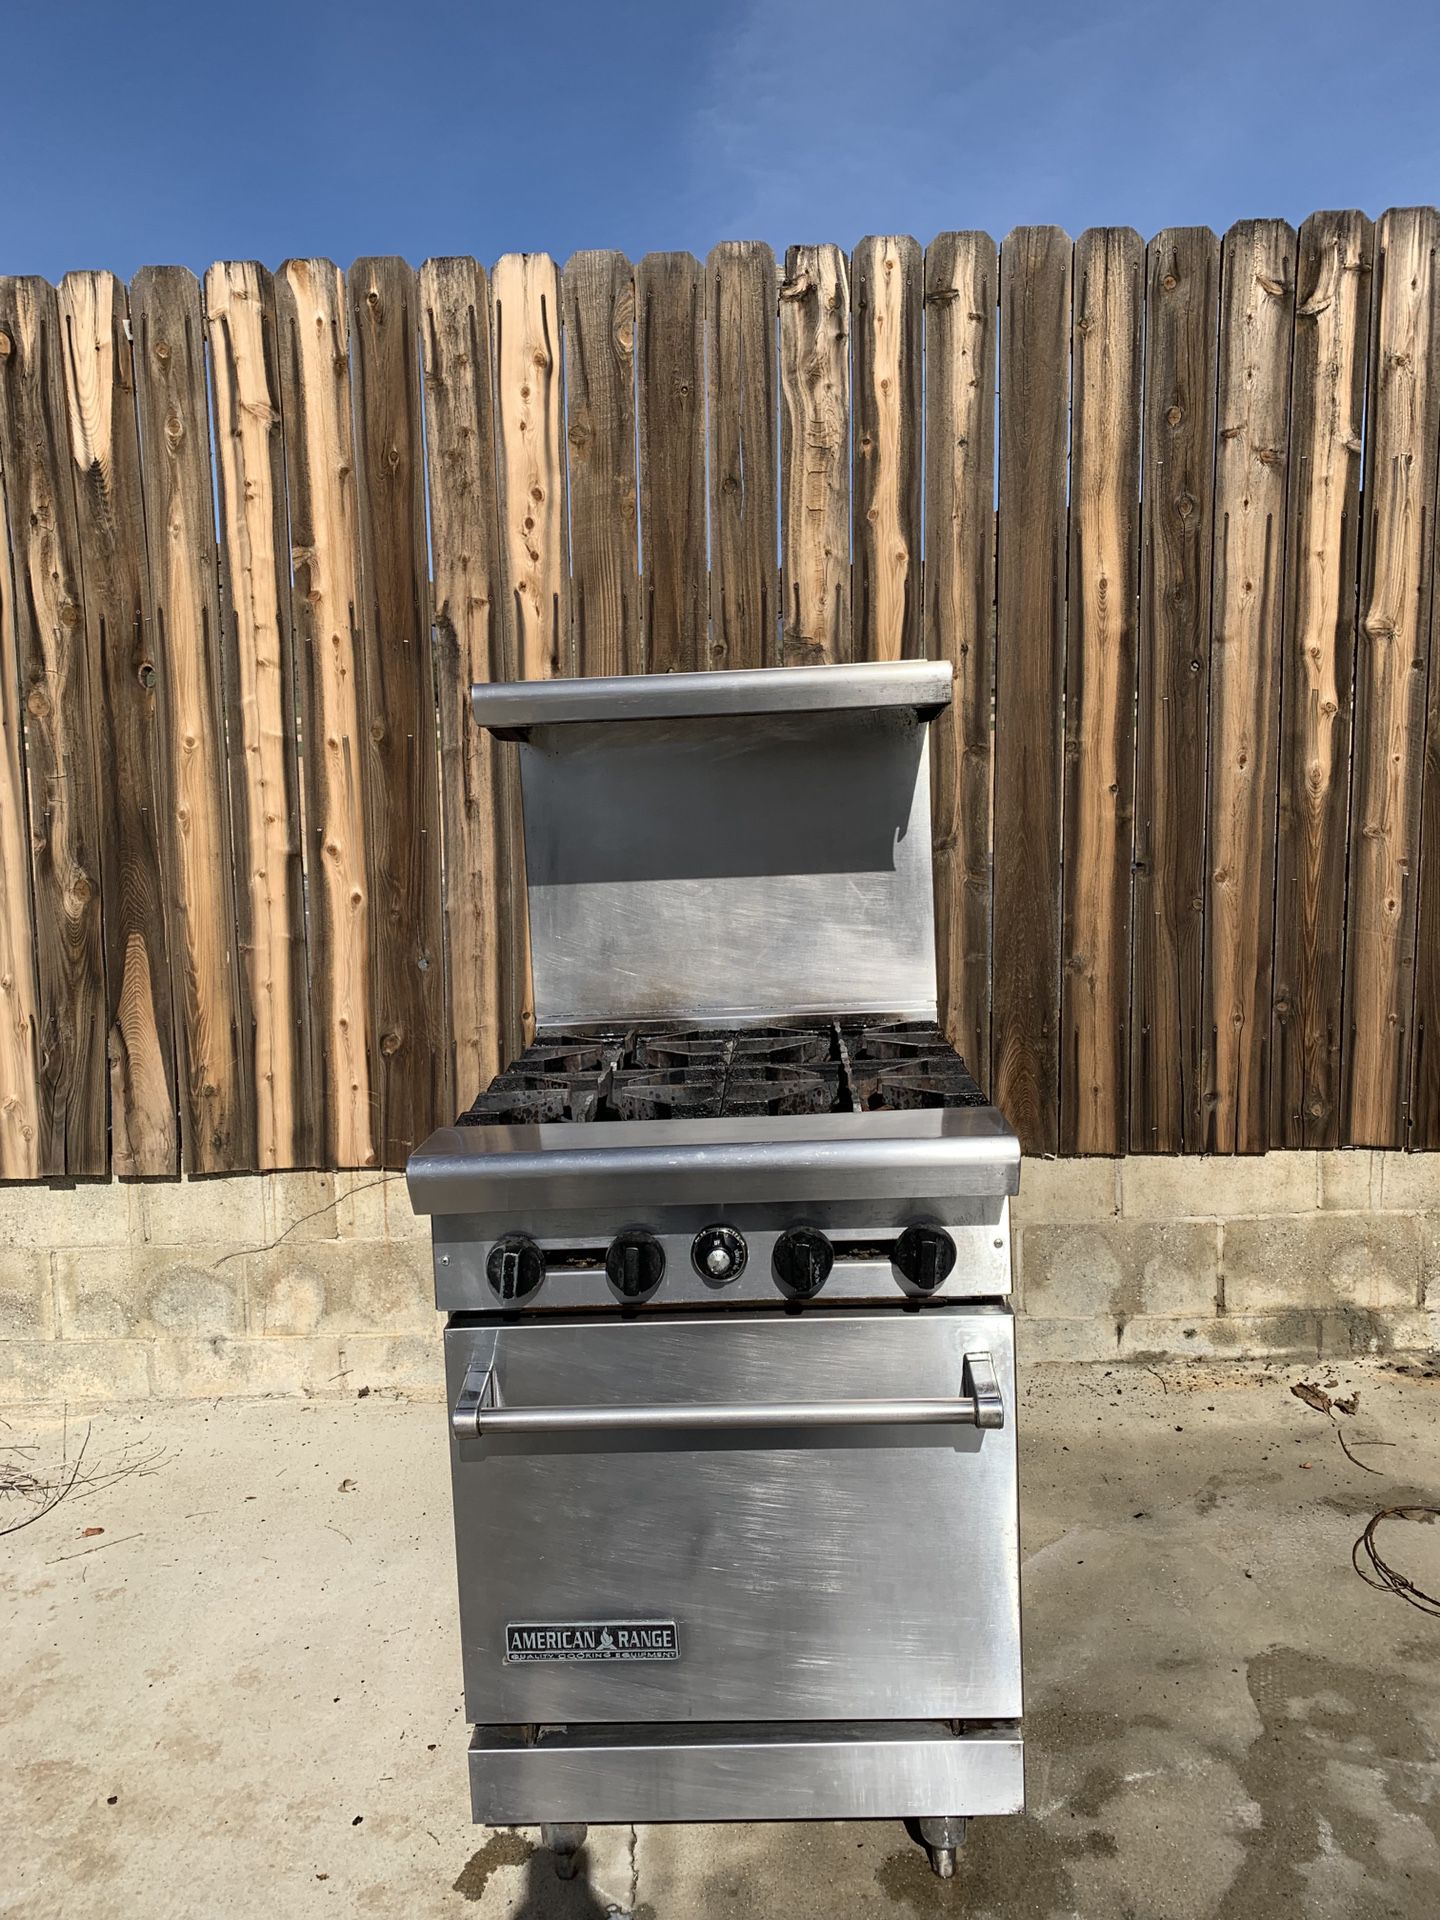 American Range 4-burner commercial oven stove